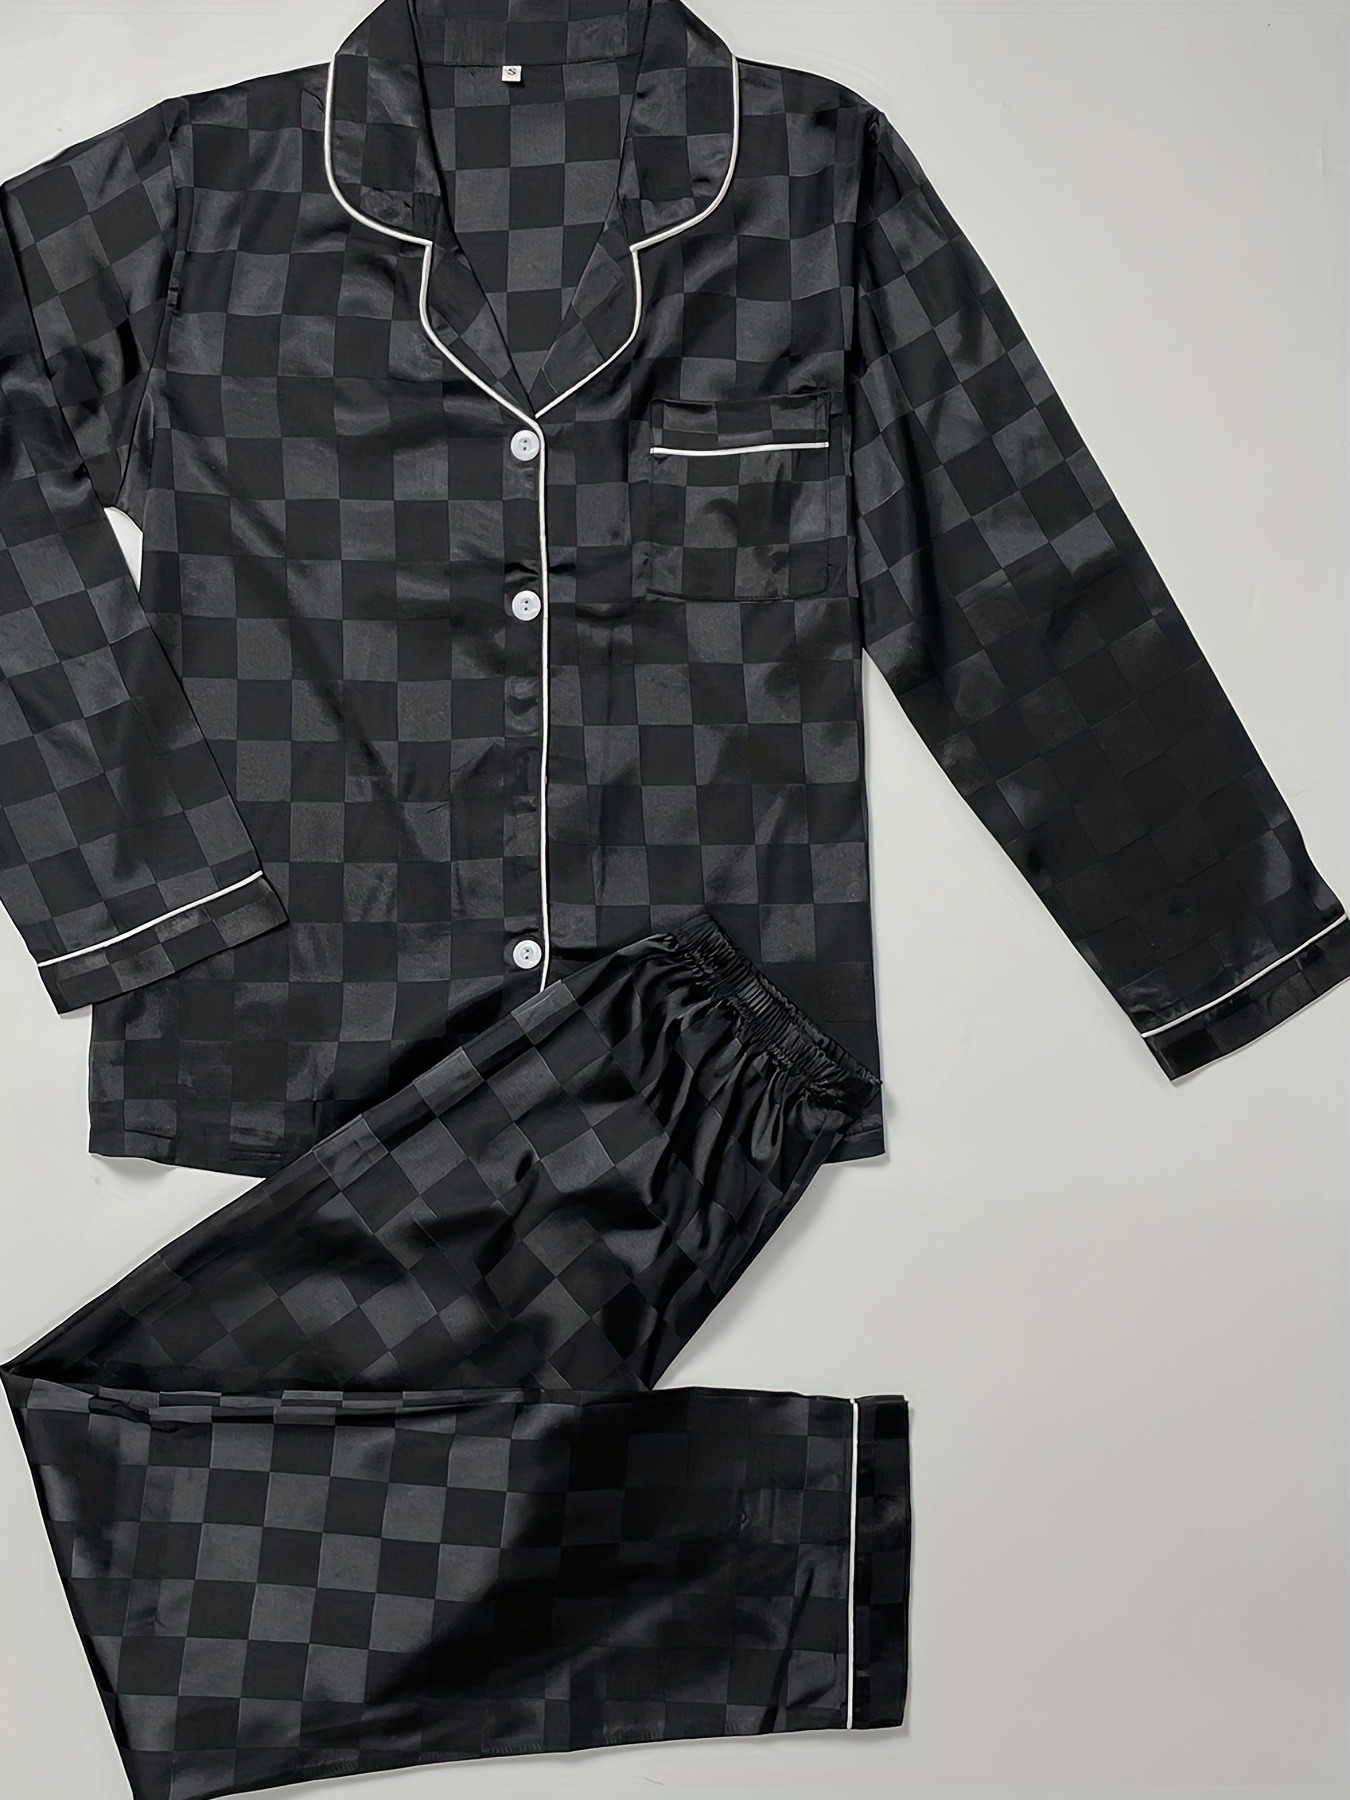 Plaid Satin Pajama Set, Long Sleeve Buttons Top & Elastic